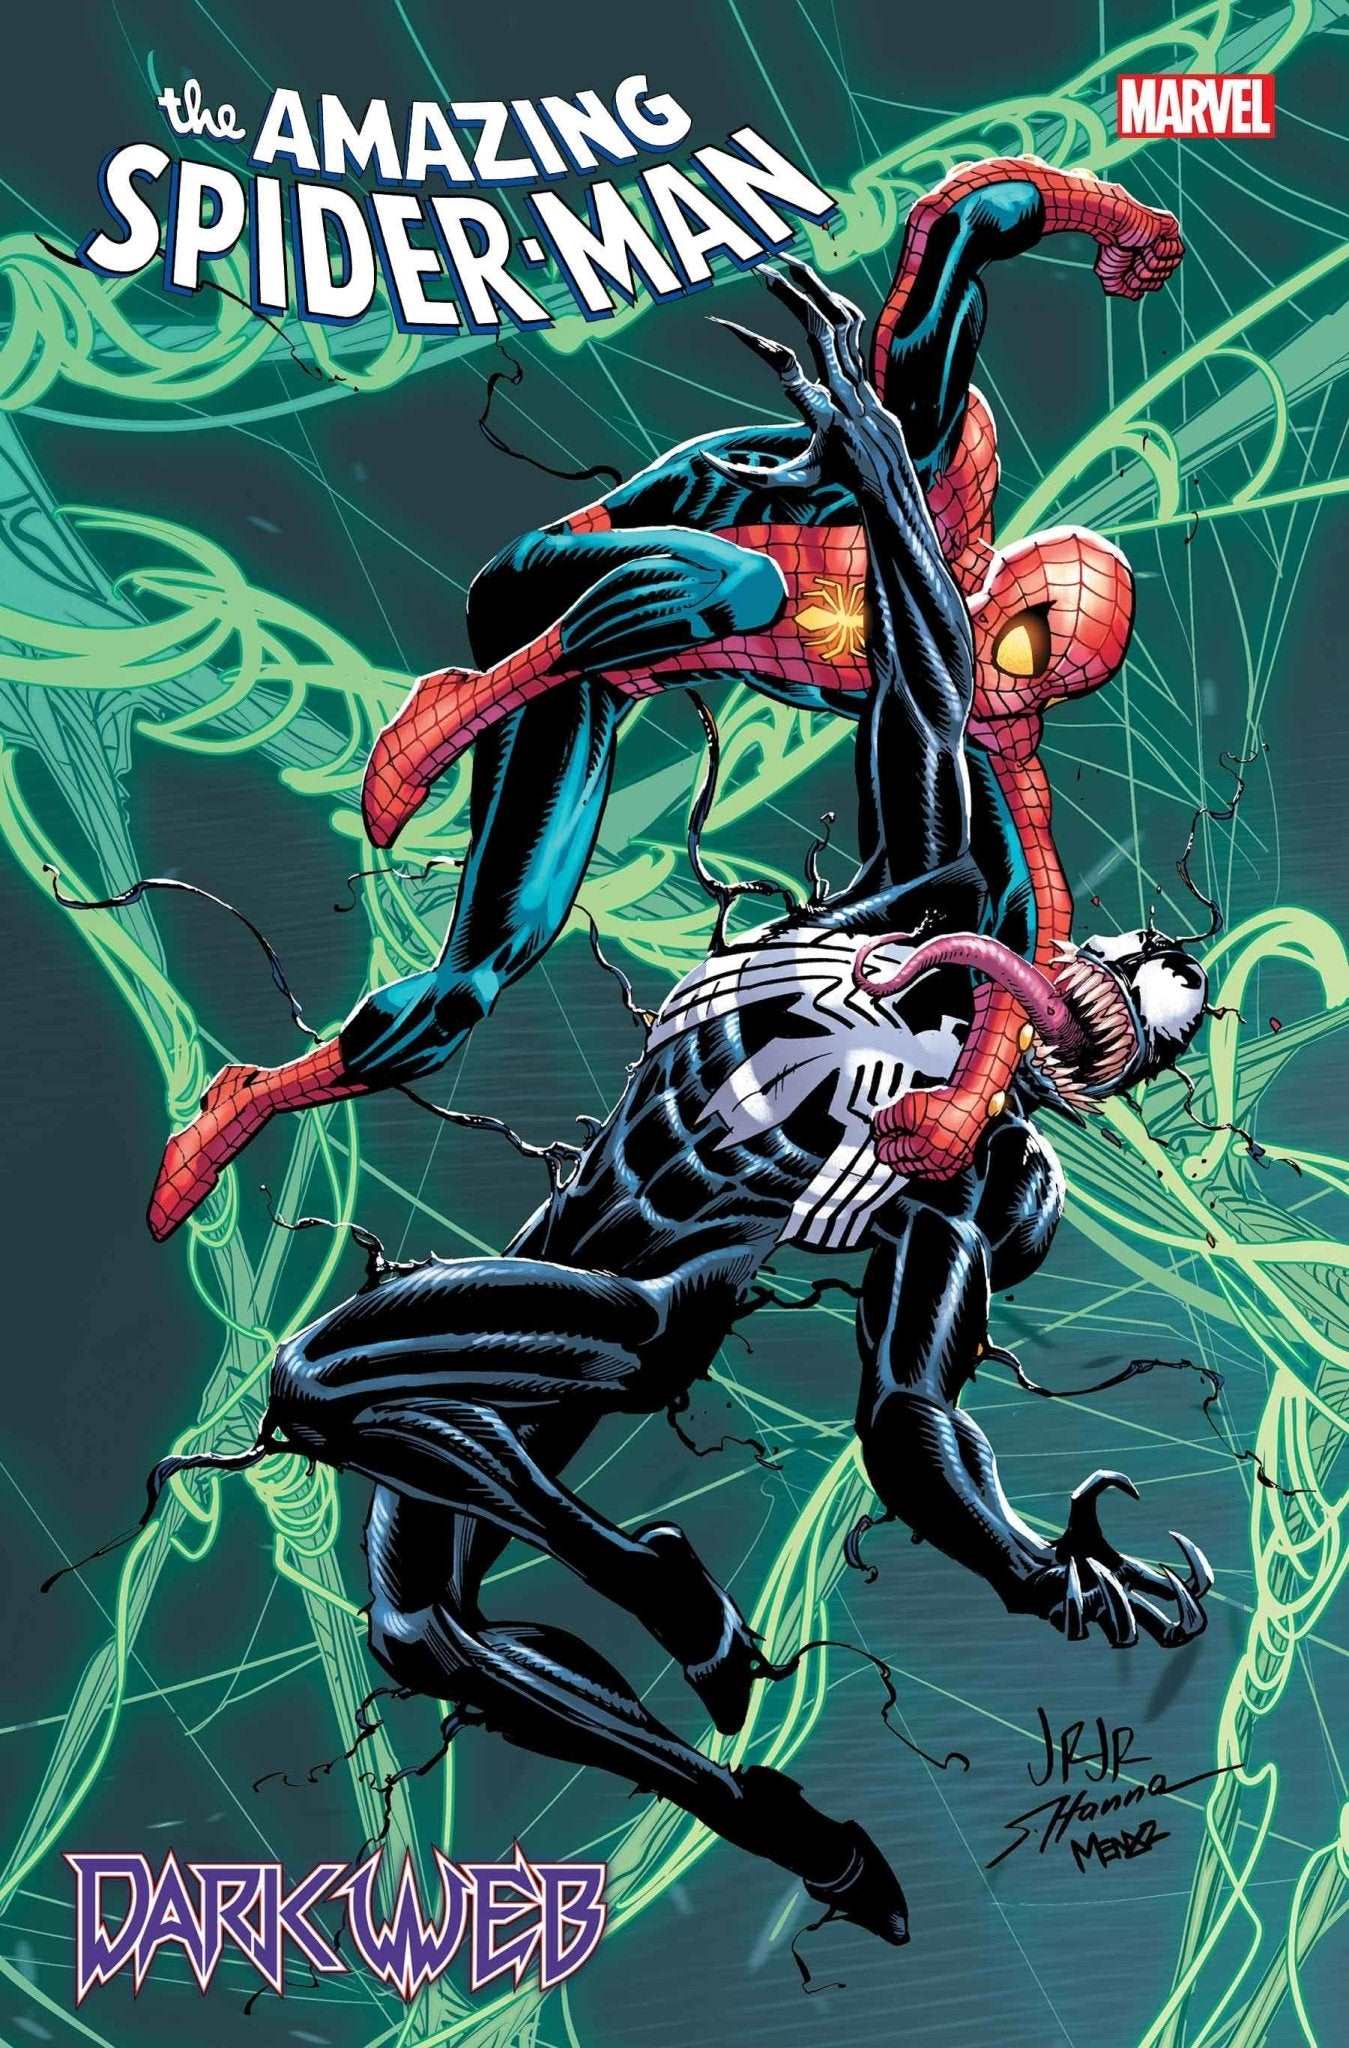 AMAZING SPIDER-MAN #15 - The Comic Construct